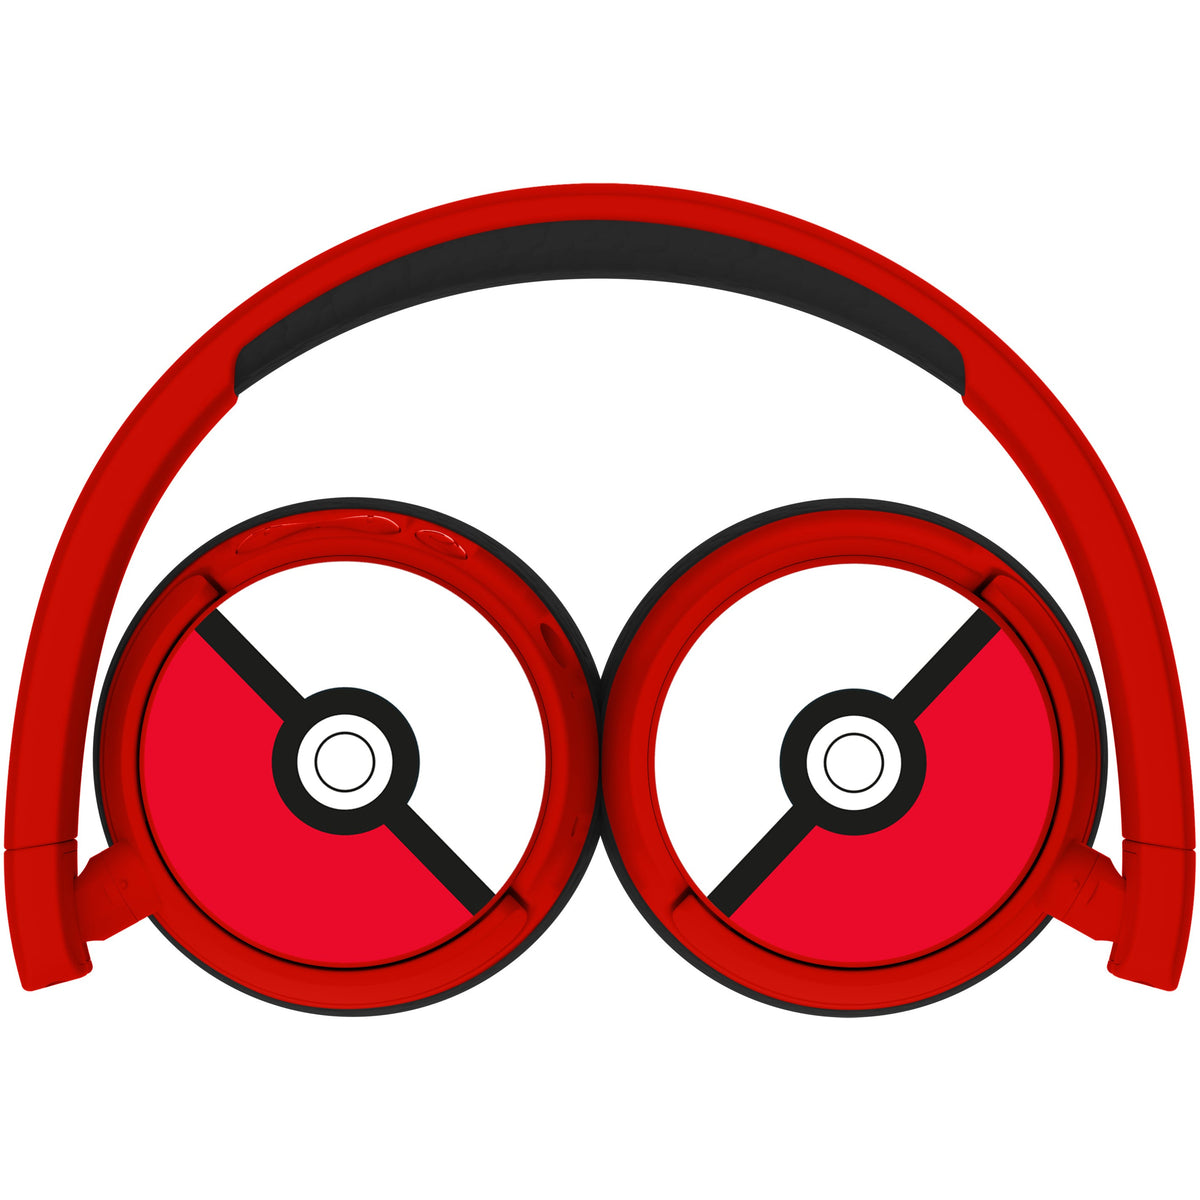 OTL Pokemon Poke ball Kids Wireless Headphones - Red &amp; Black | PK1000 from OTL - DID Electrical